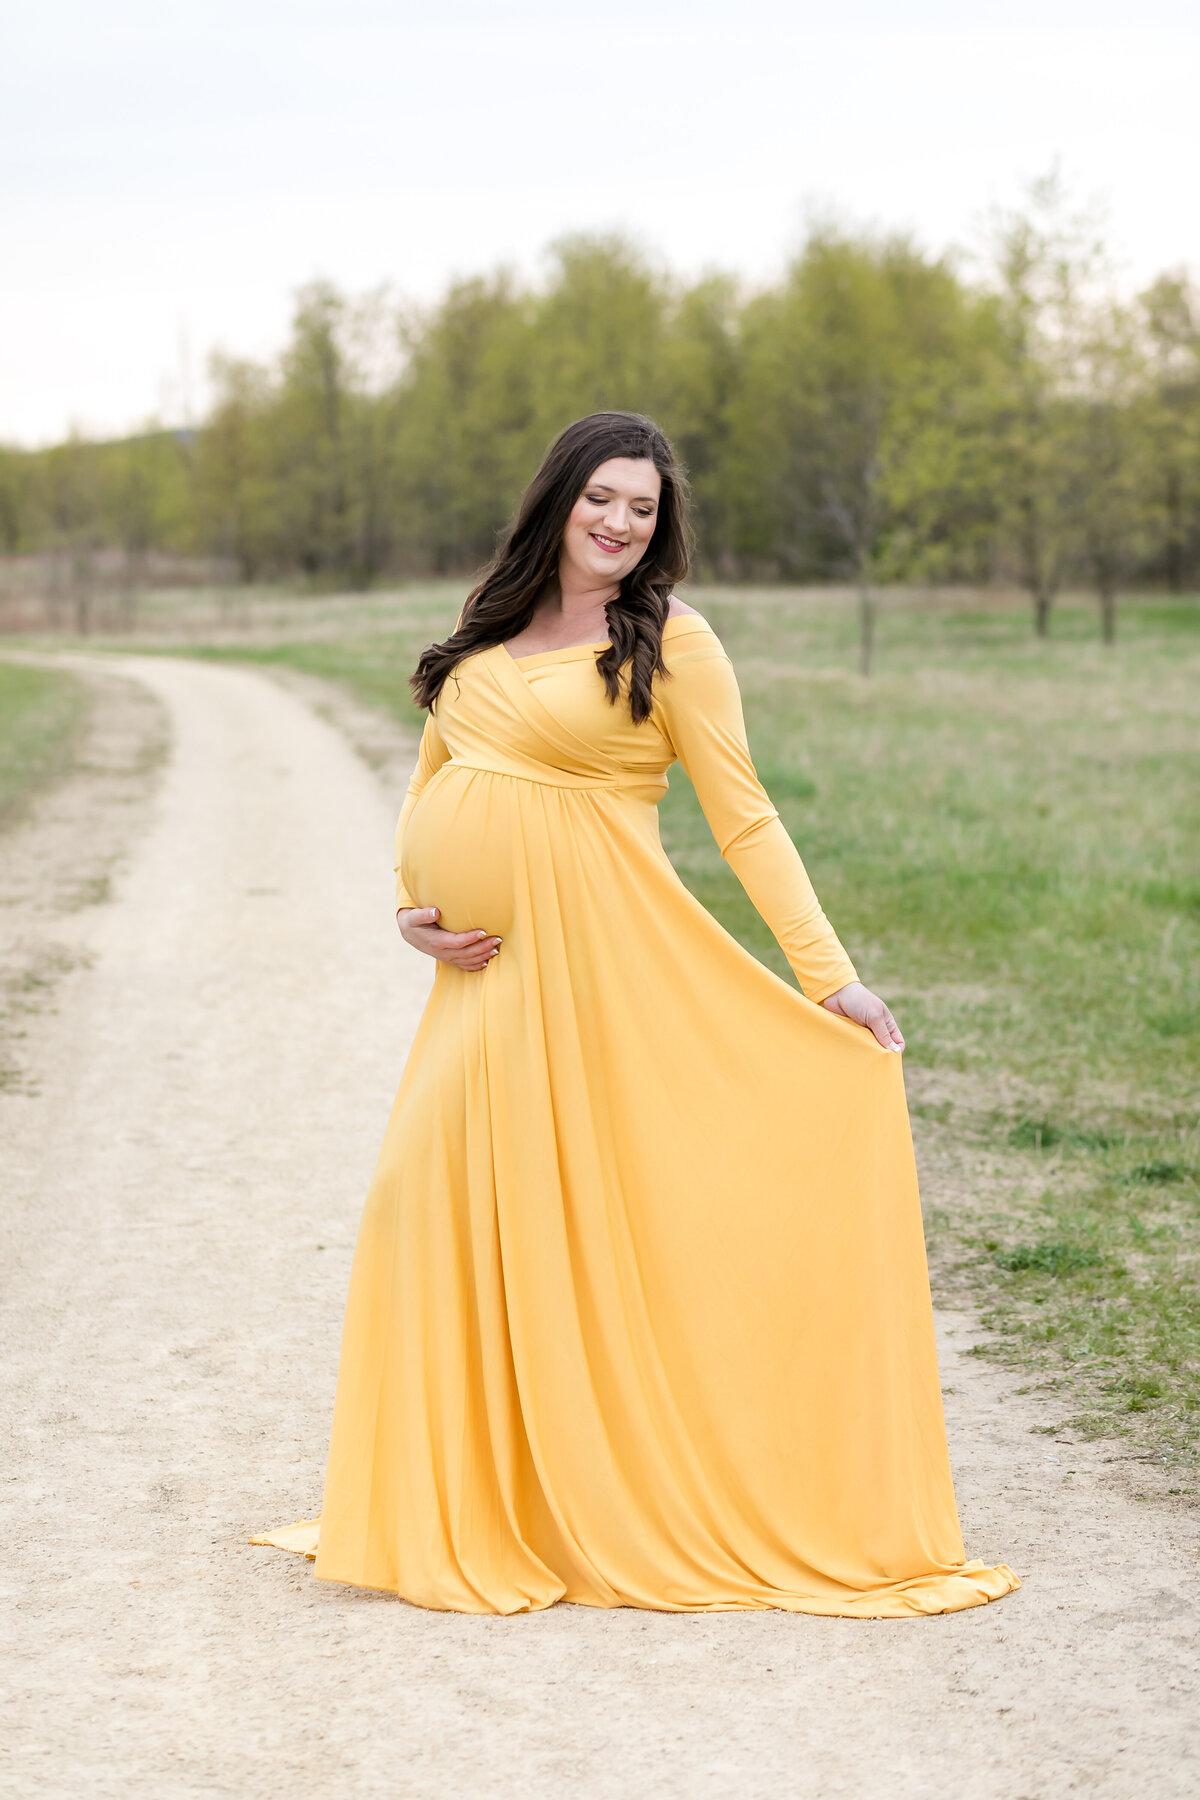 wisconsin maternity photographer family la crosse west salem luxury high end vibrant colorful